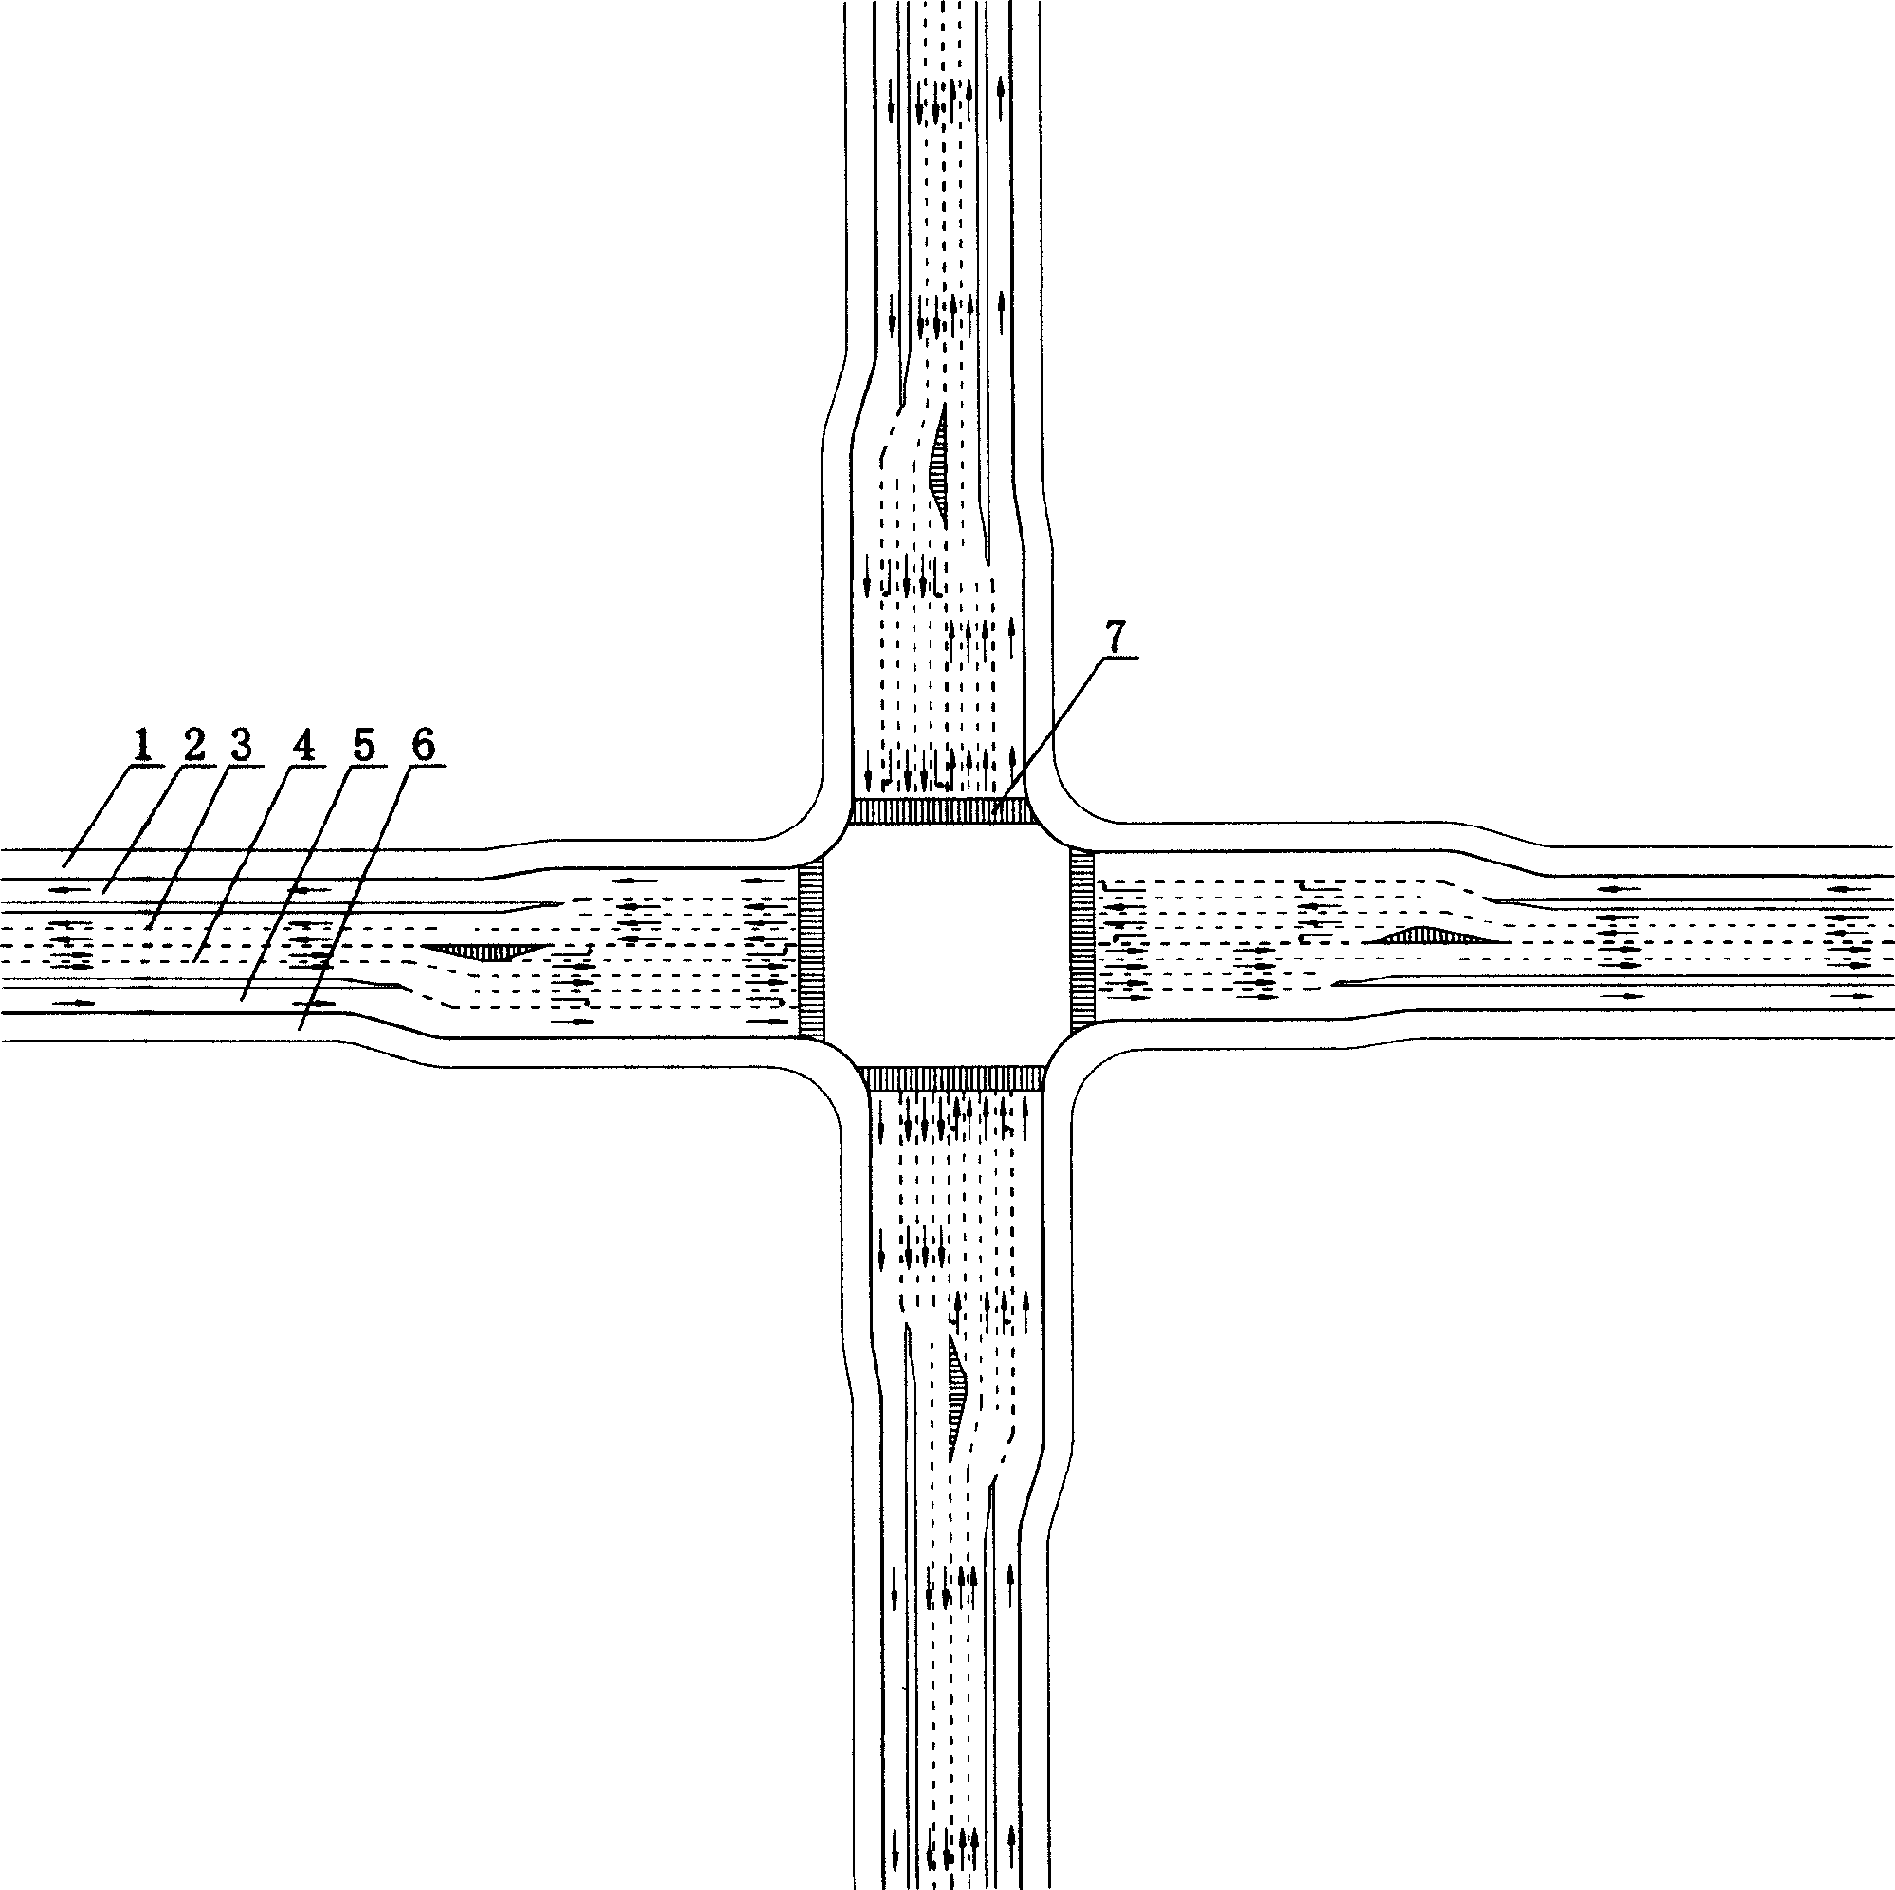 Improvement method for traffic organization of three-lane road and crossing